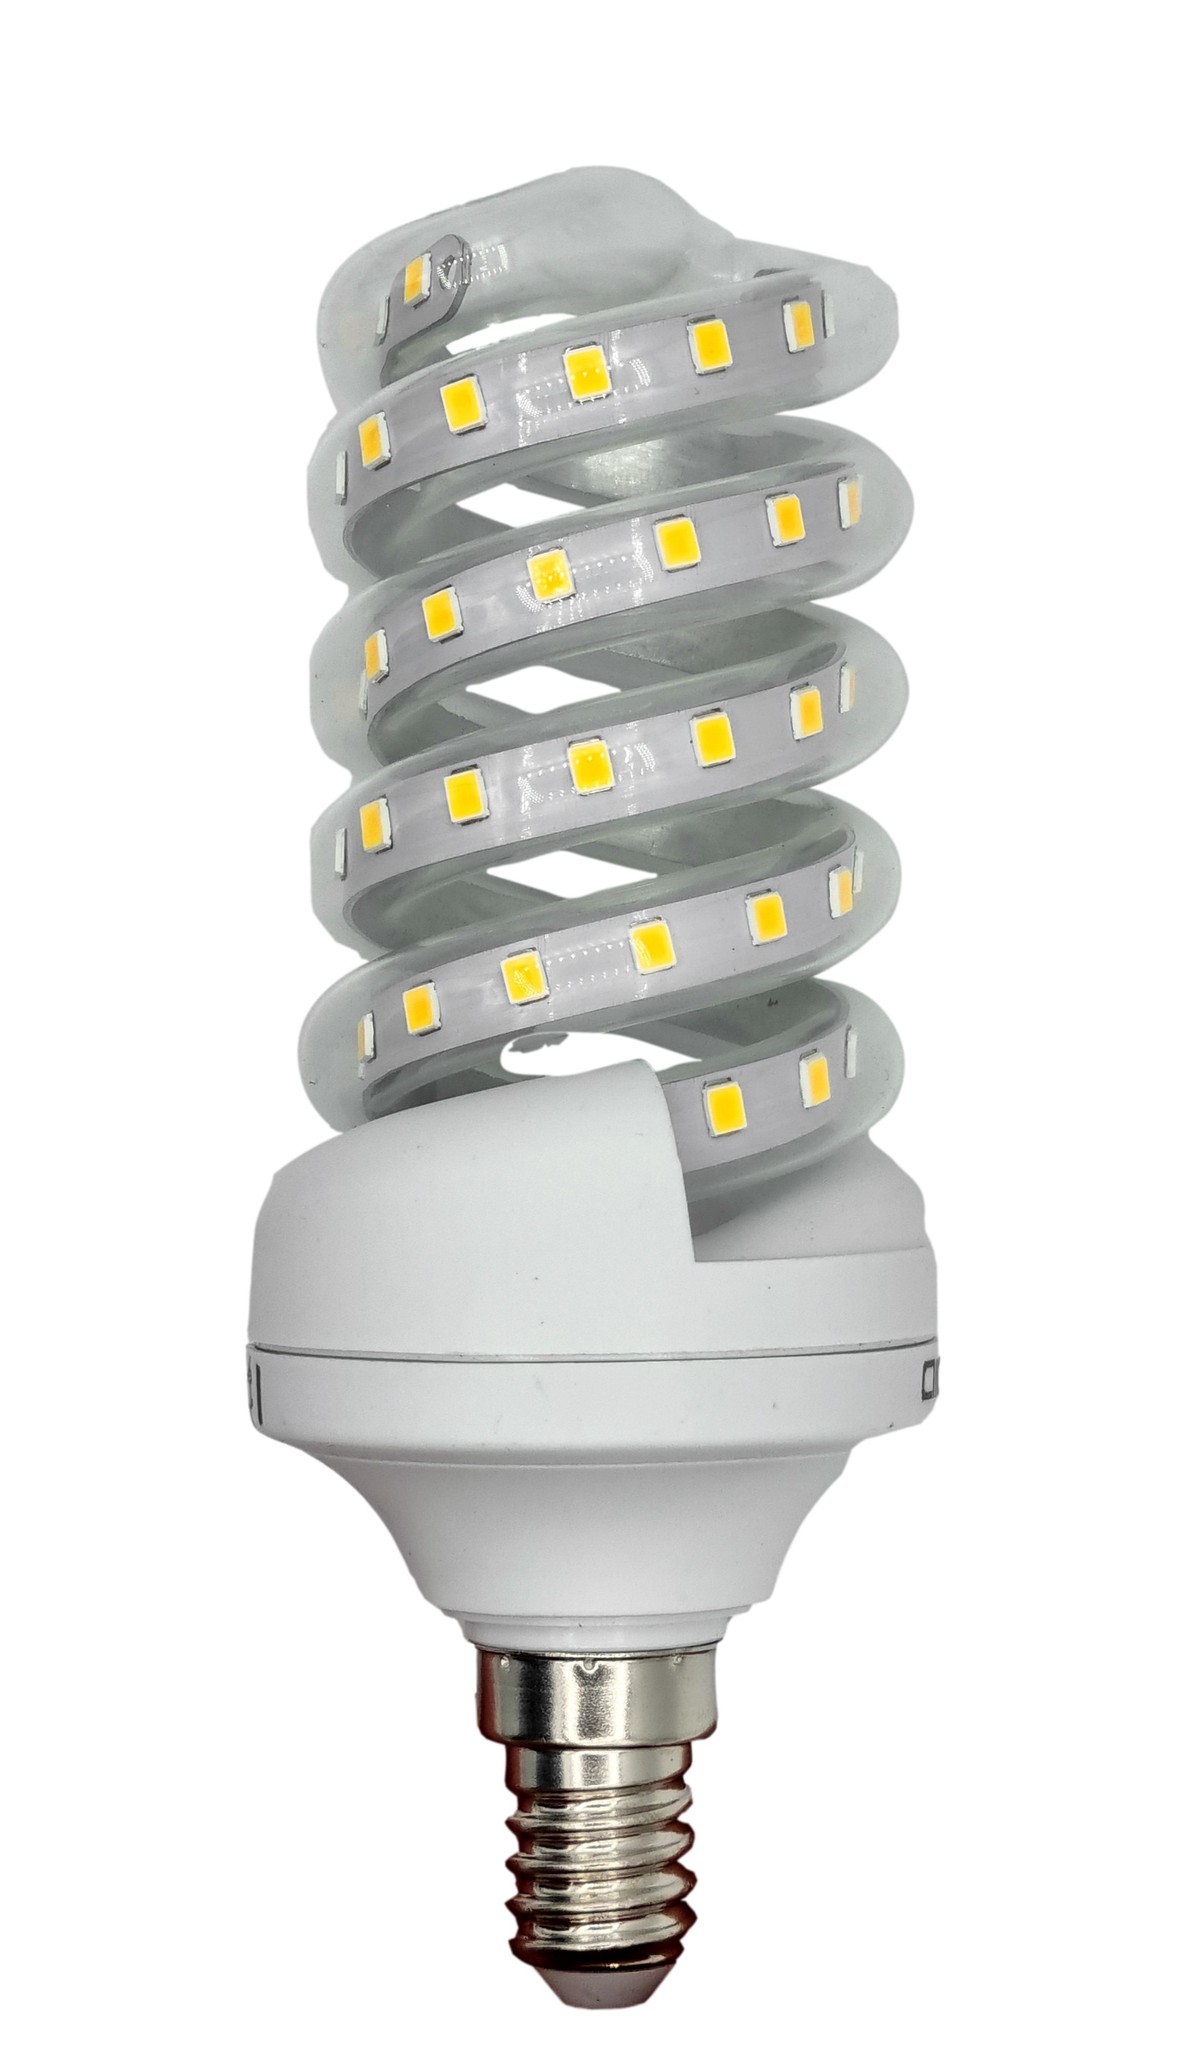 ik ben verdwaald Omgeving Uil Spaarlamp E14 LED | spiraalvorm | LED 7W=48W gloeilamp | warmwit 3000K